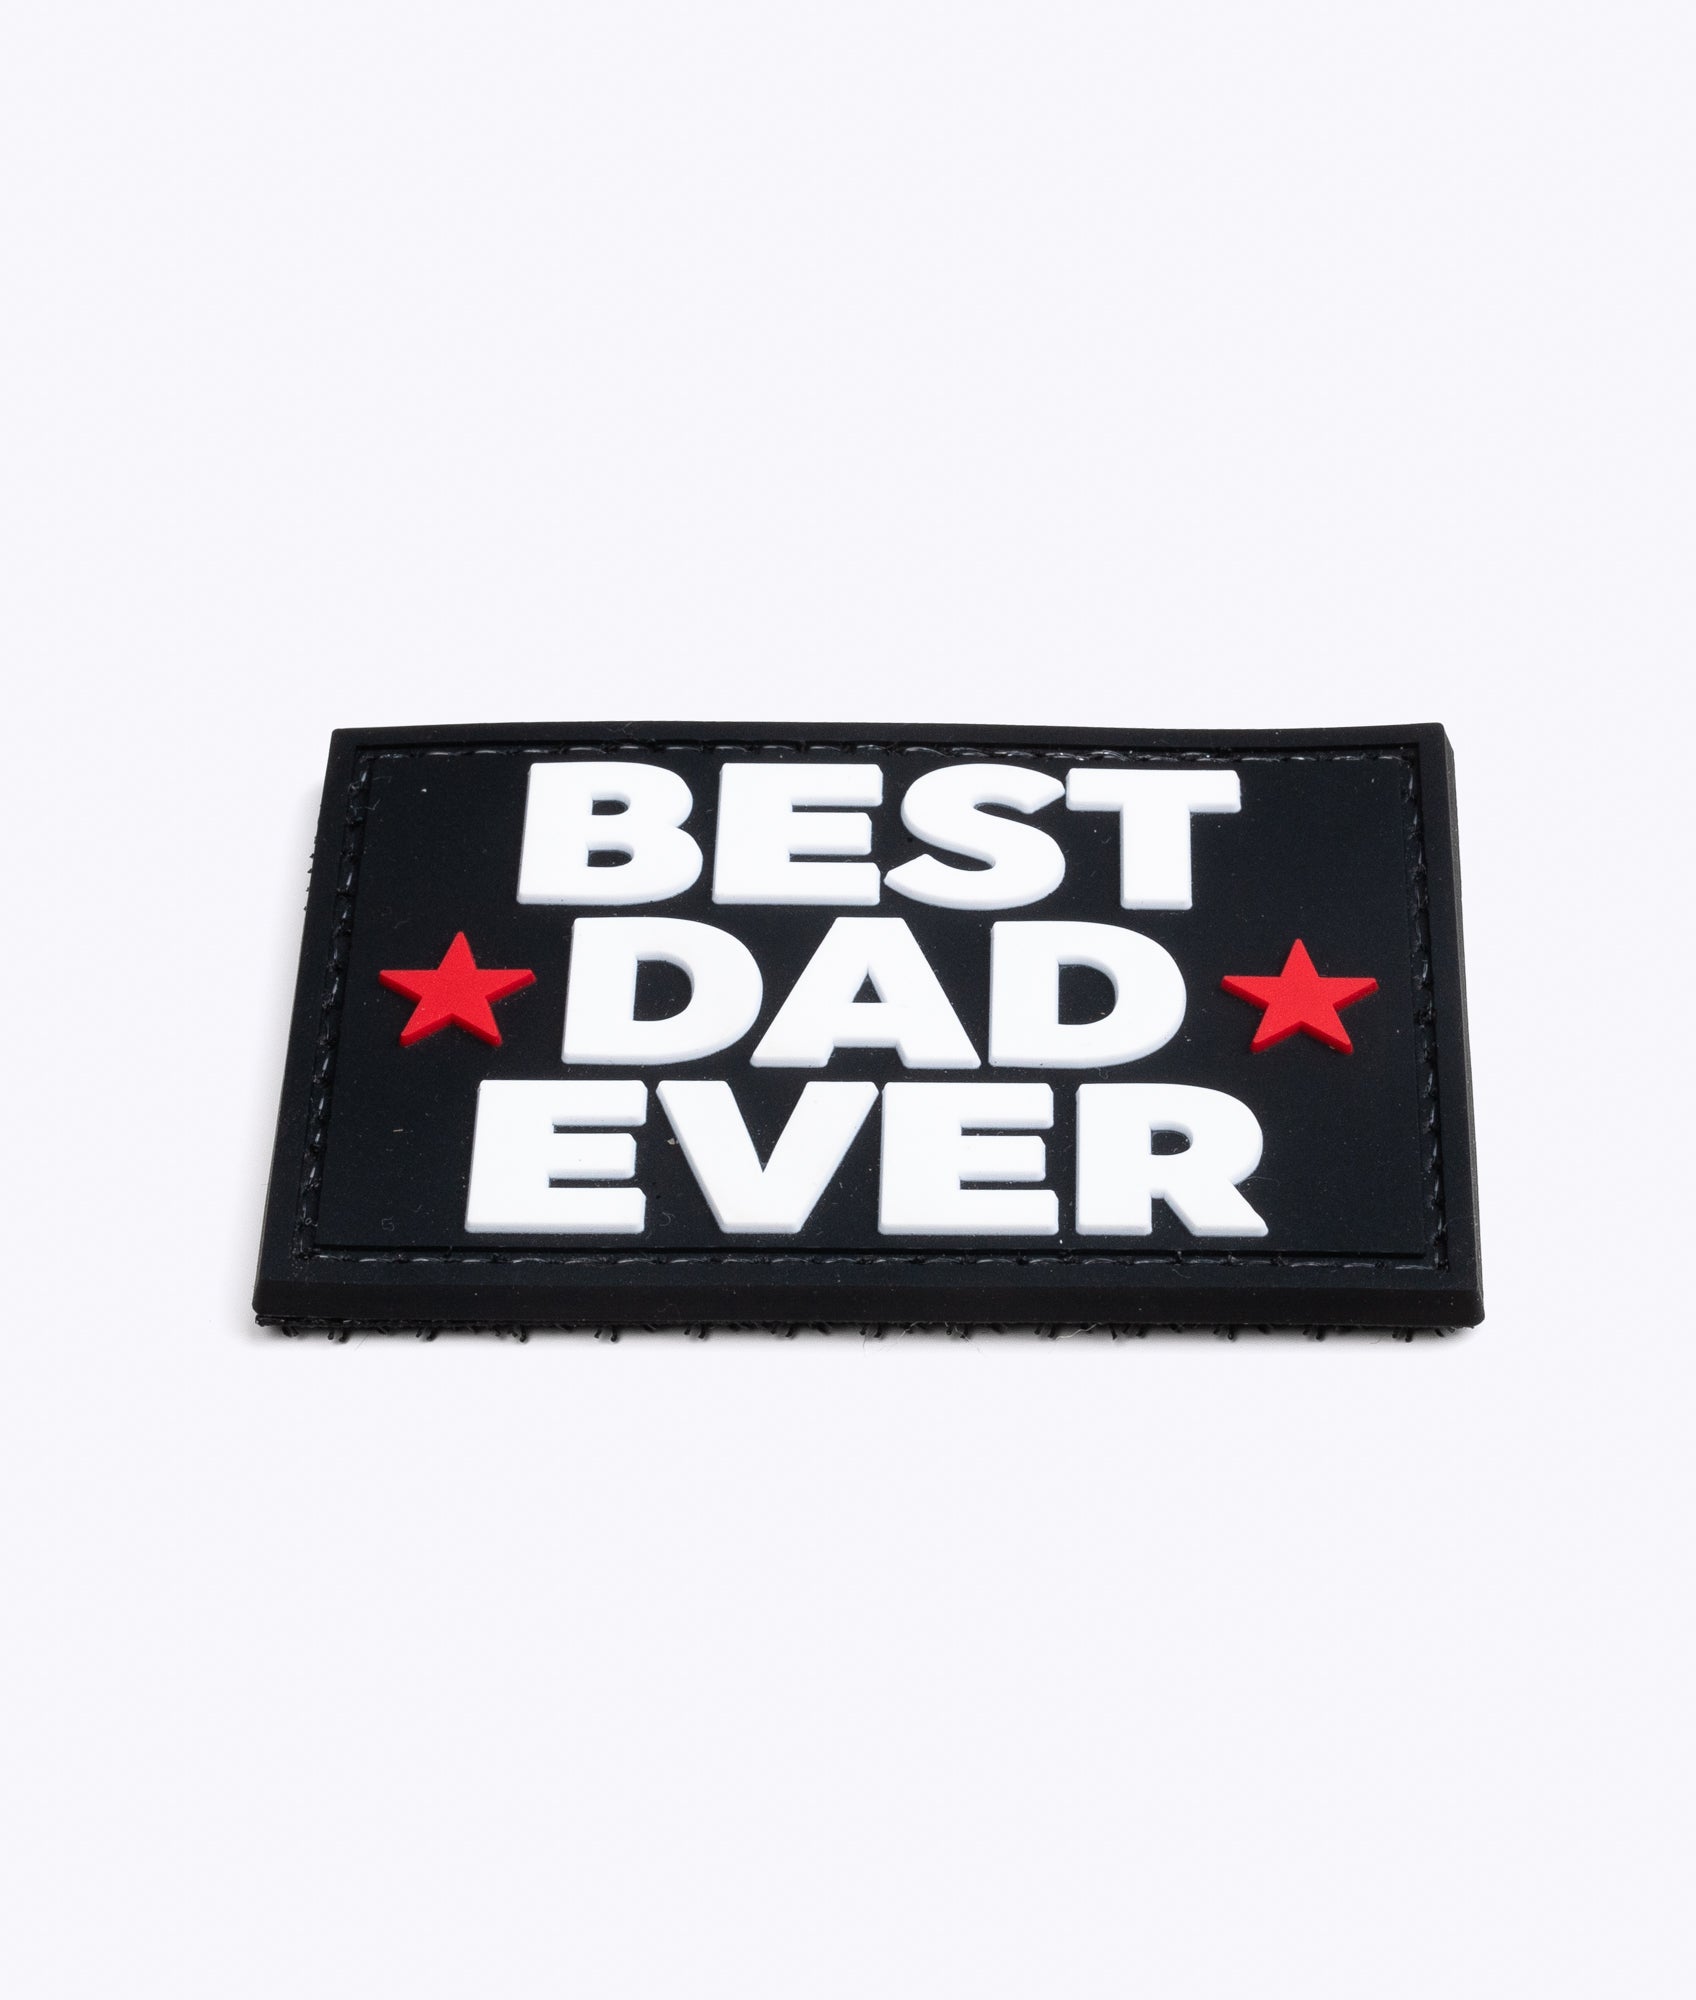 'Best Dad Ever' PVC Patch